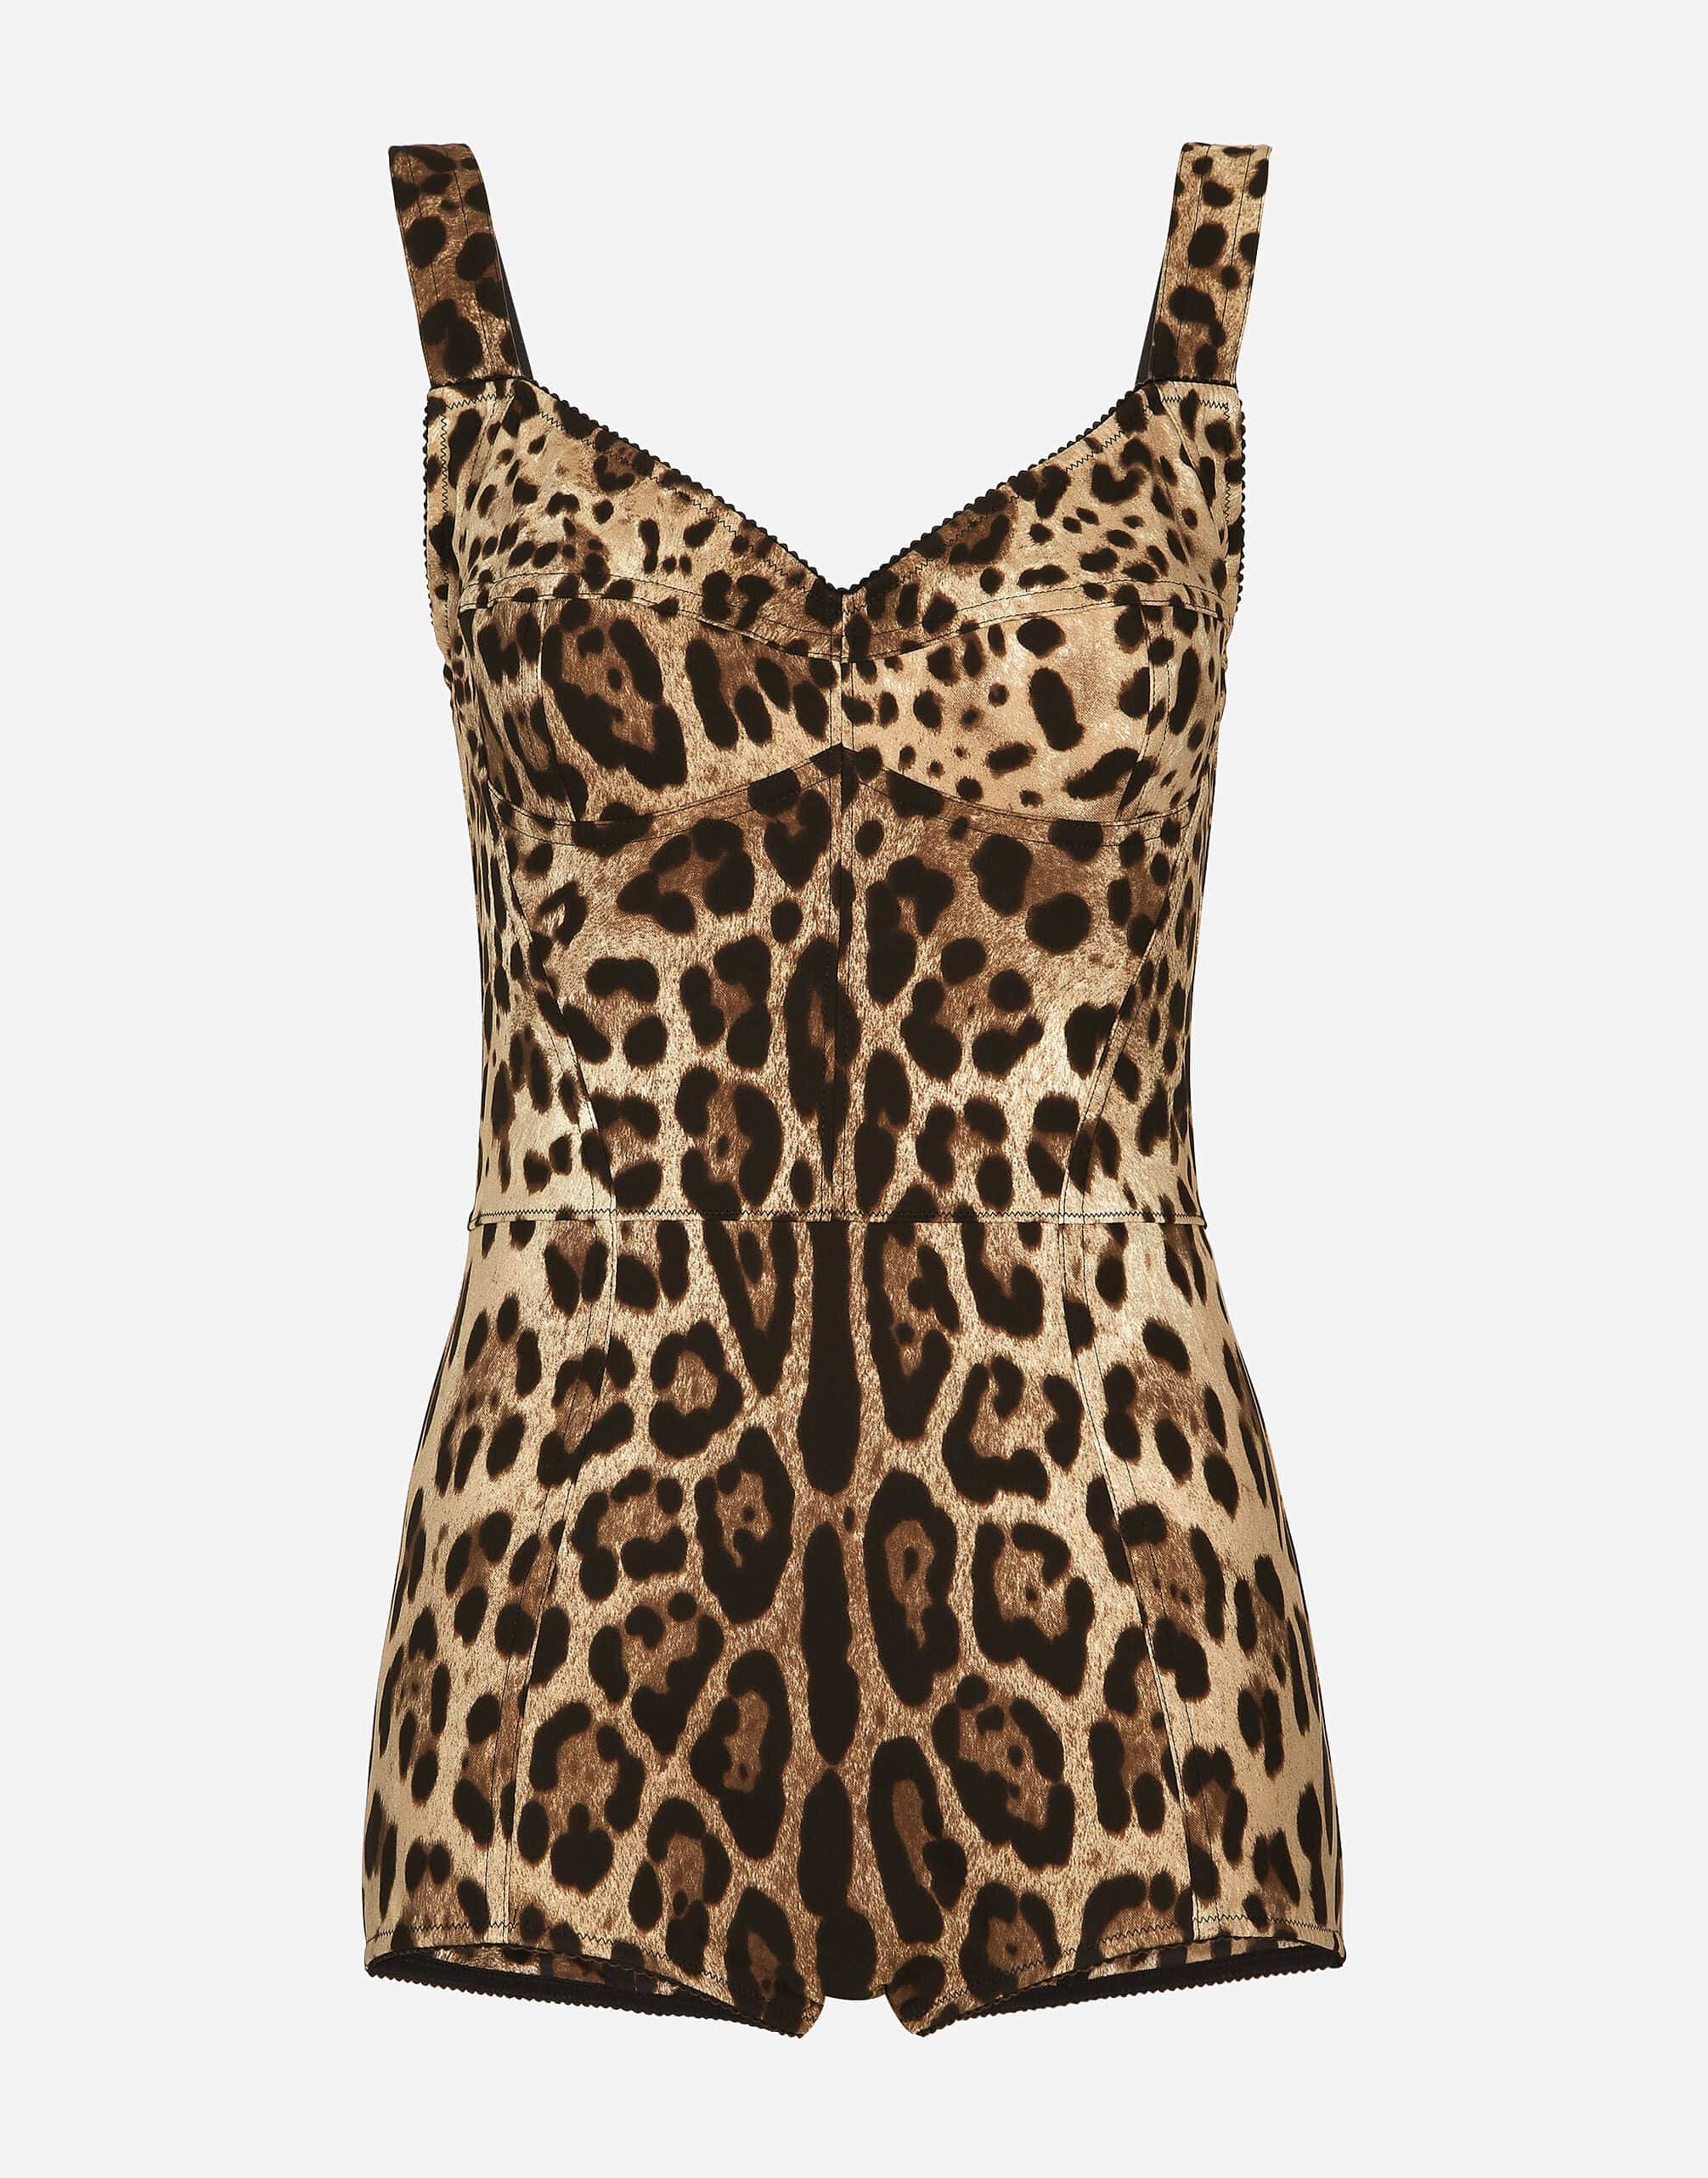 Dolce & Gabbana Leopard-Print Charmeuse Bodysuit